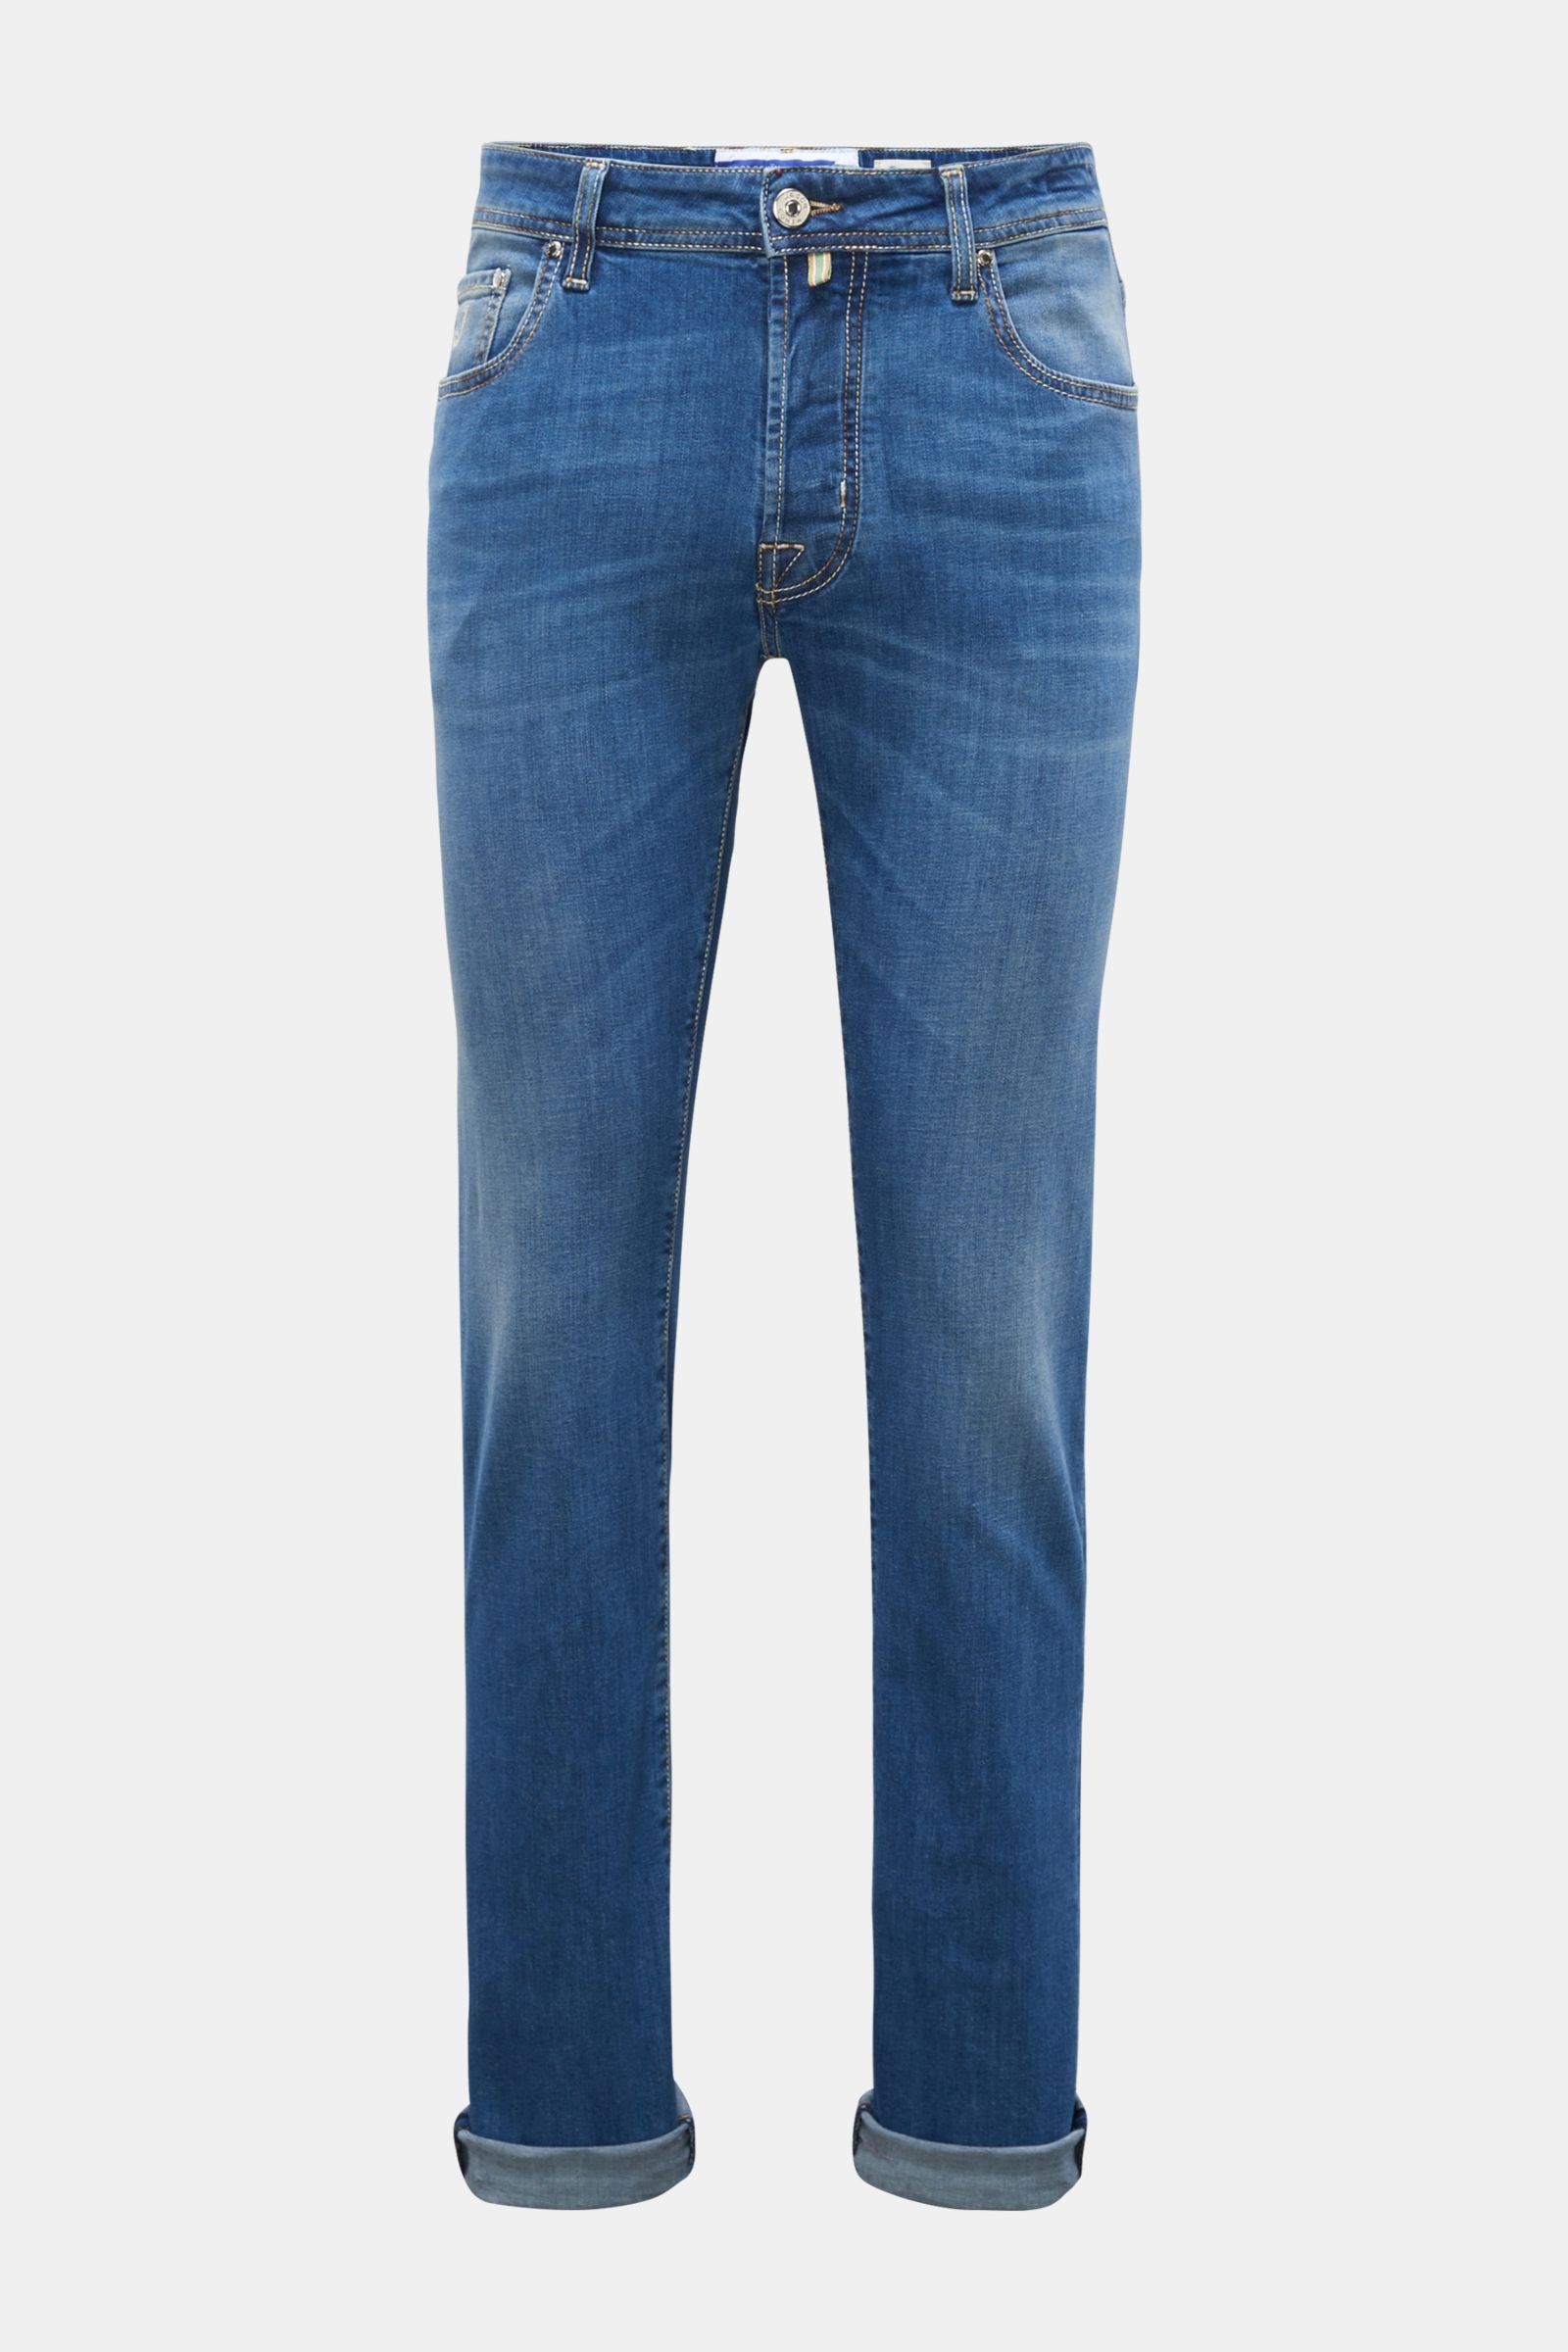 Jeans 'Bard' grey-blue (previously J688)